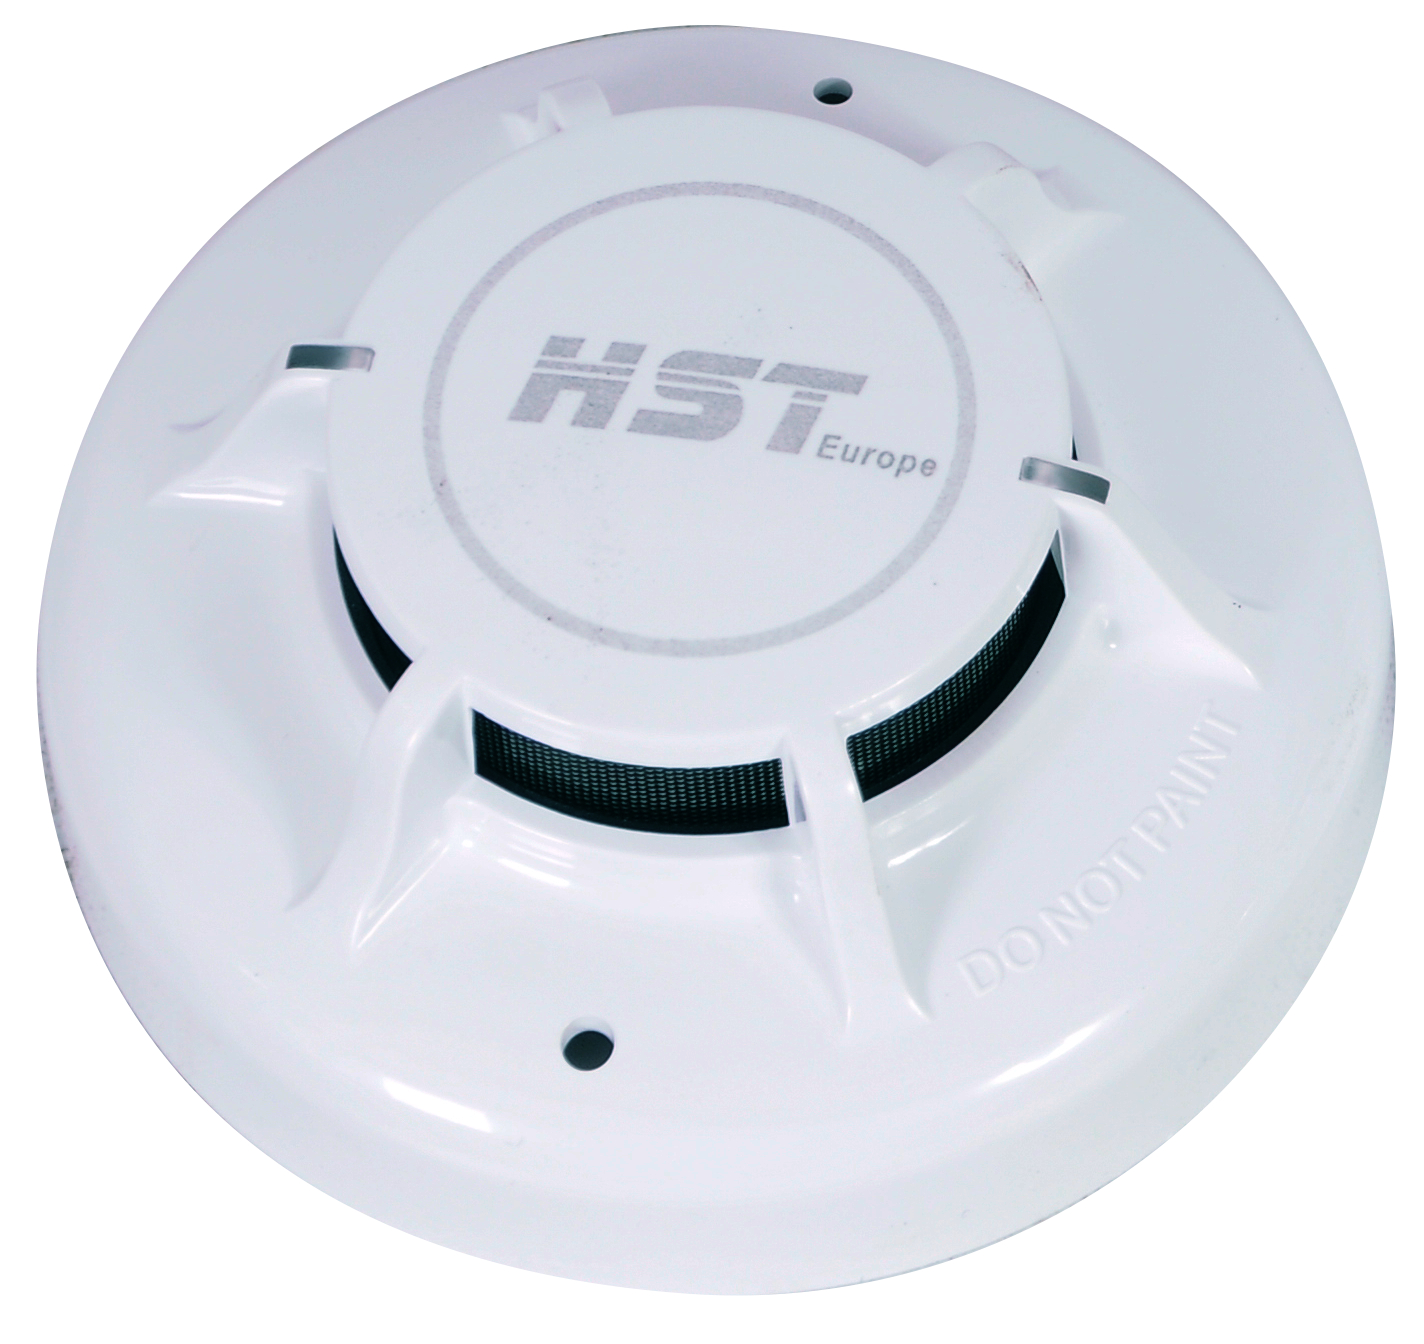 HD201B Addressable Photoelectric Smoke Detector